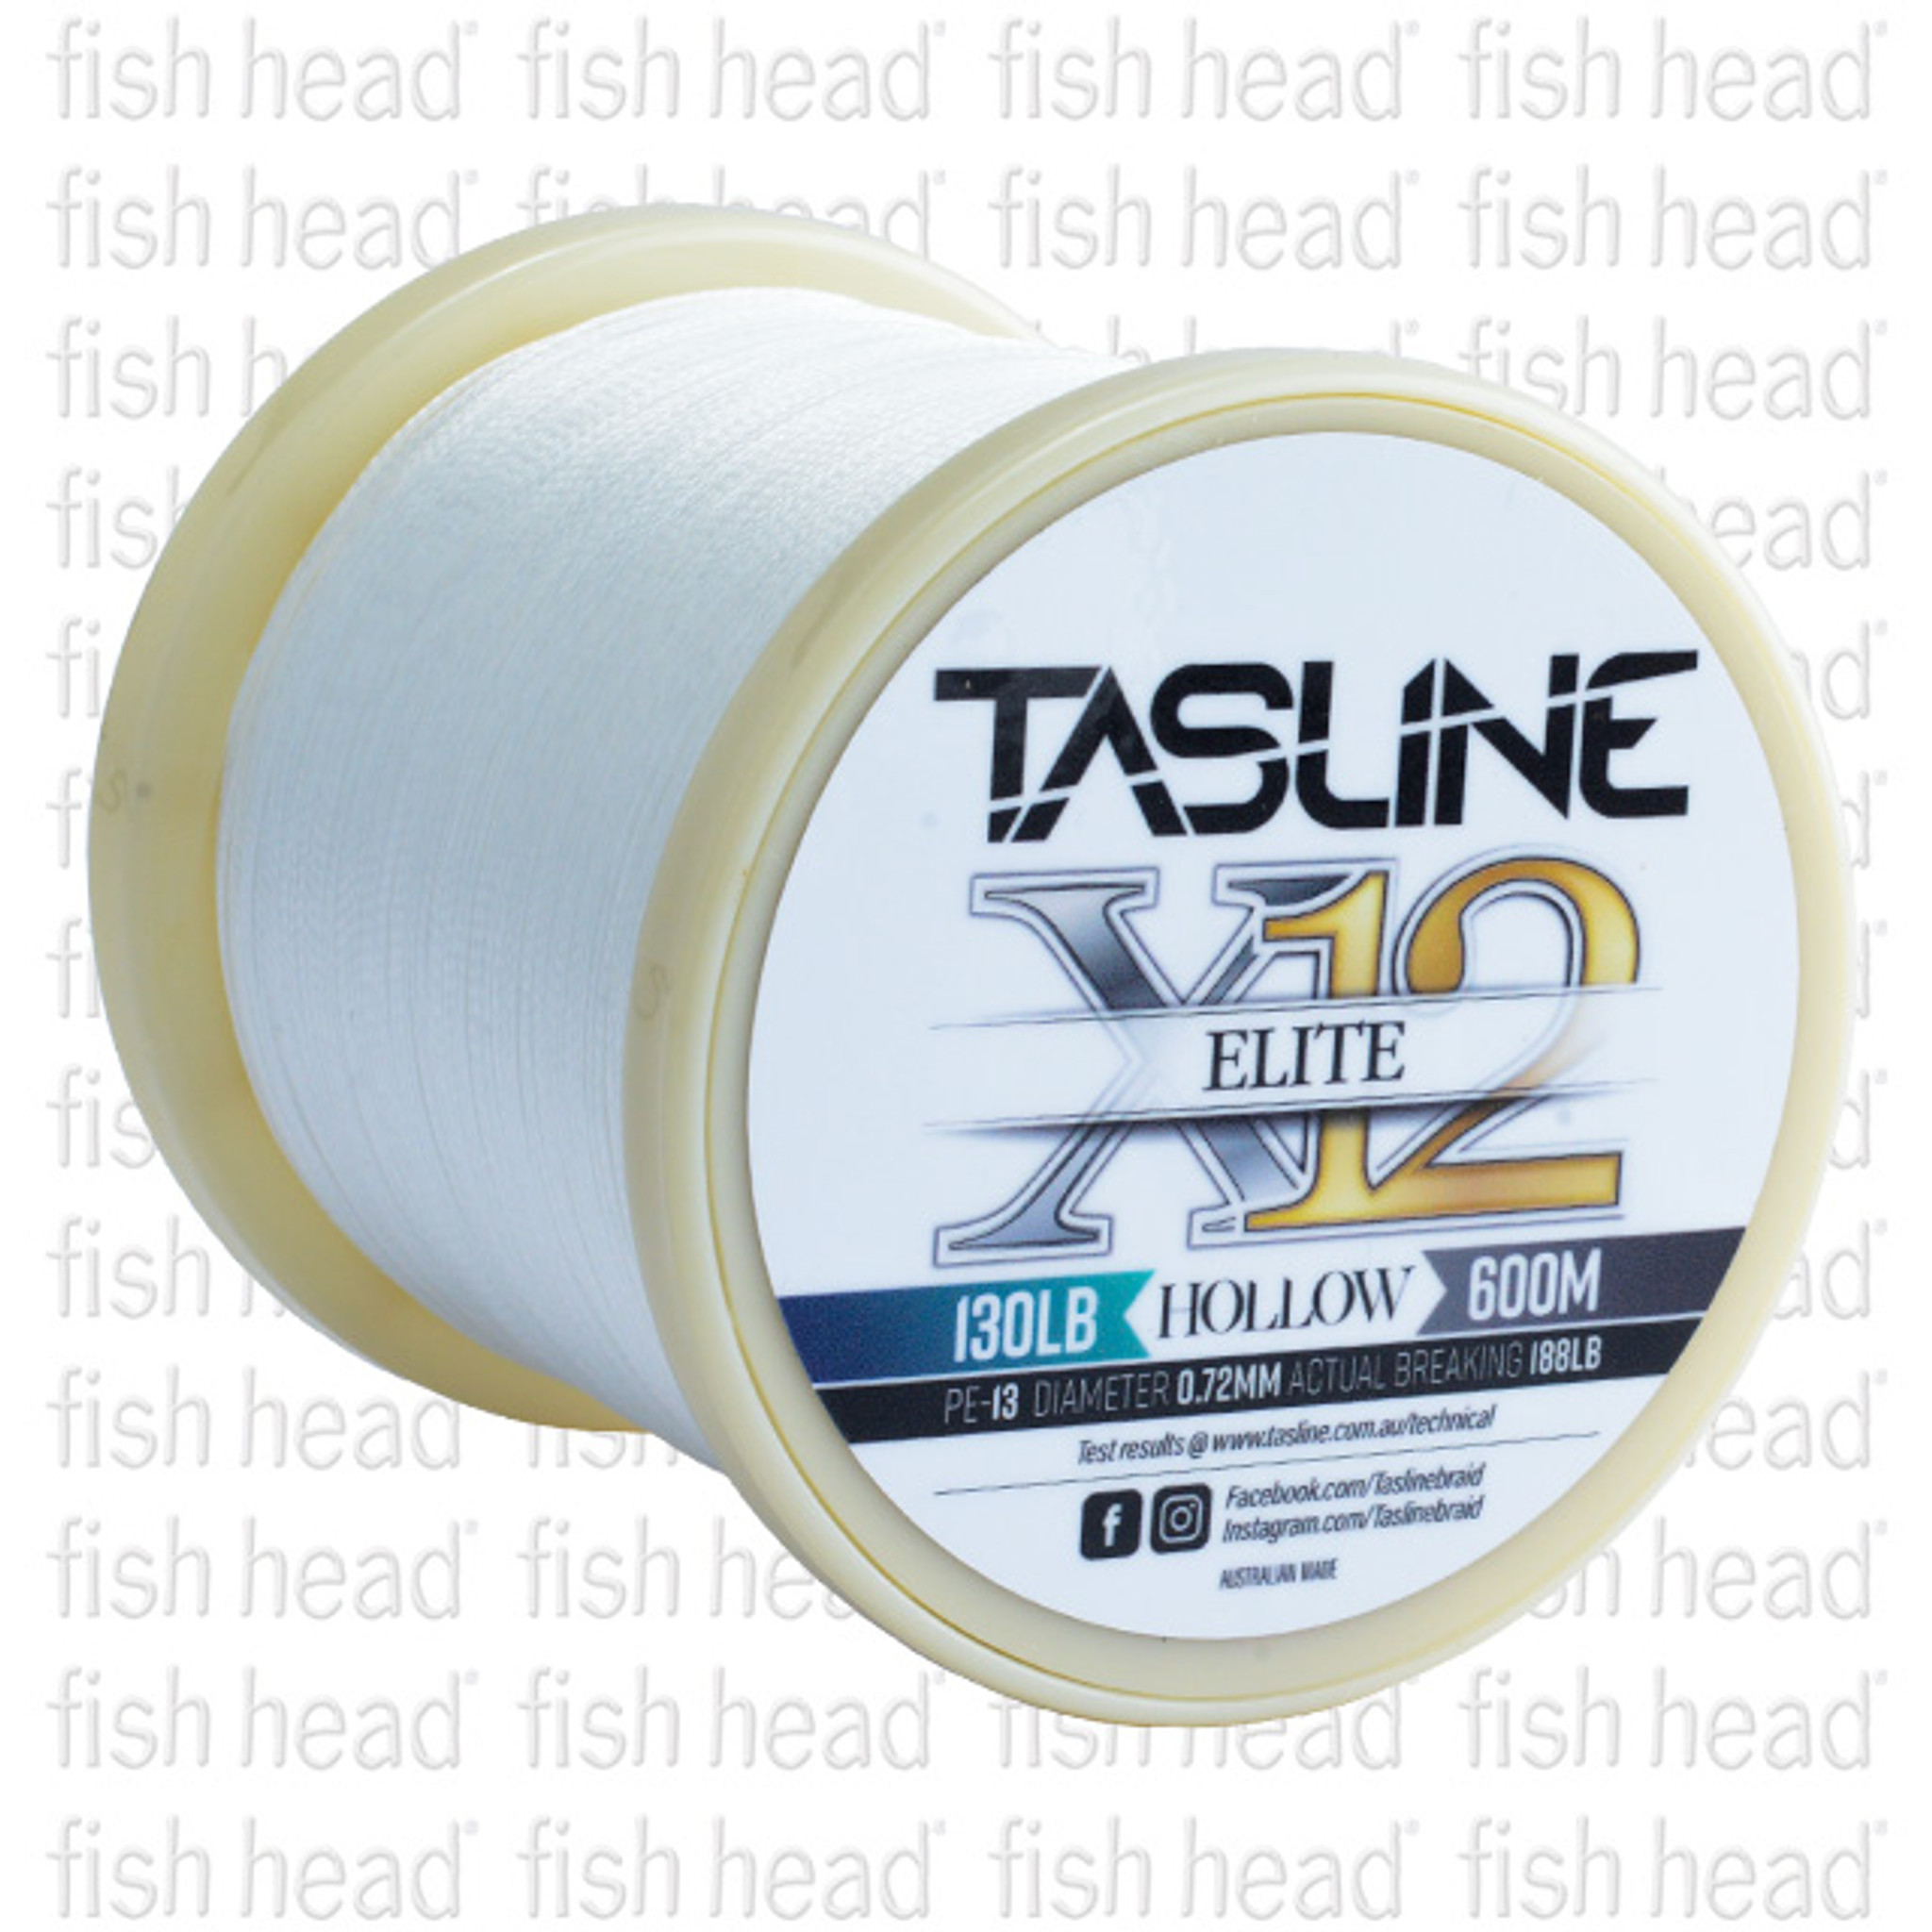 Tasline Elite X12 Hollow 600m - Fish Head